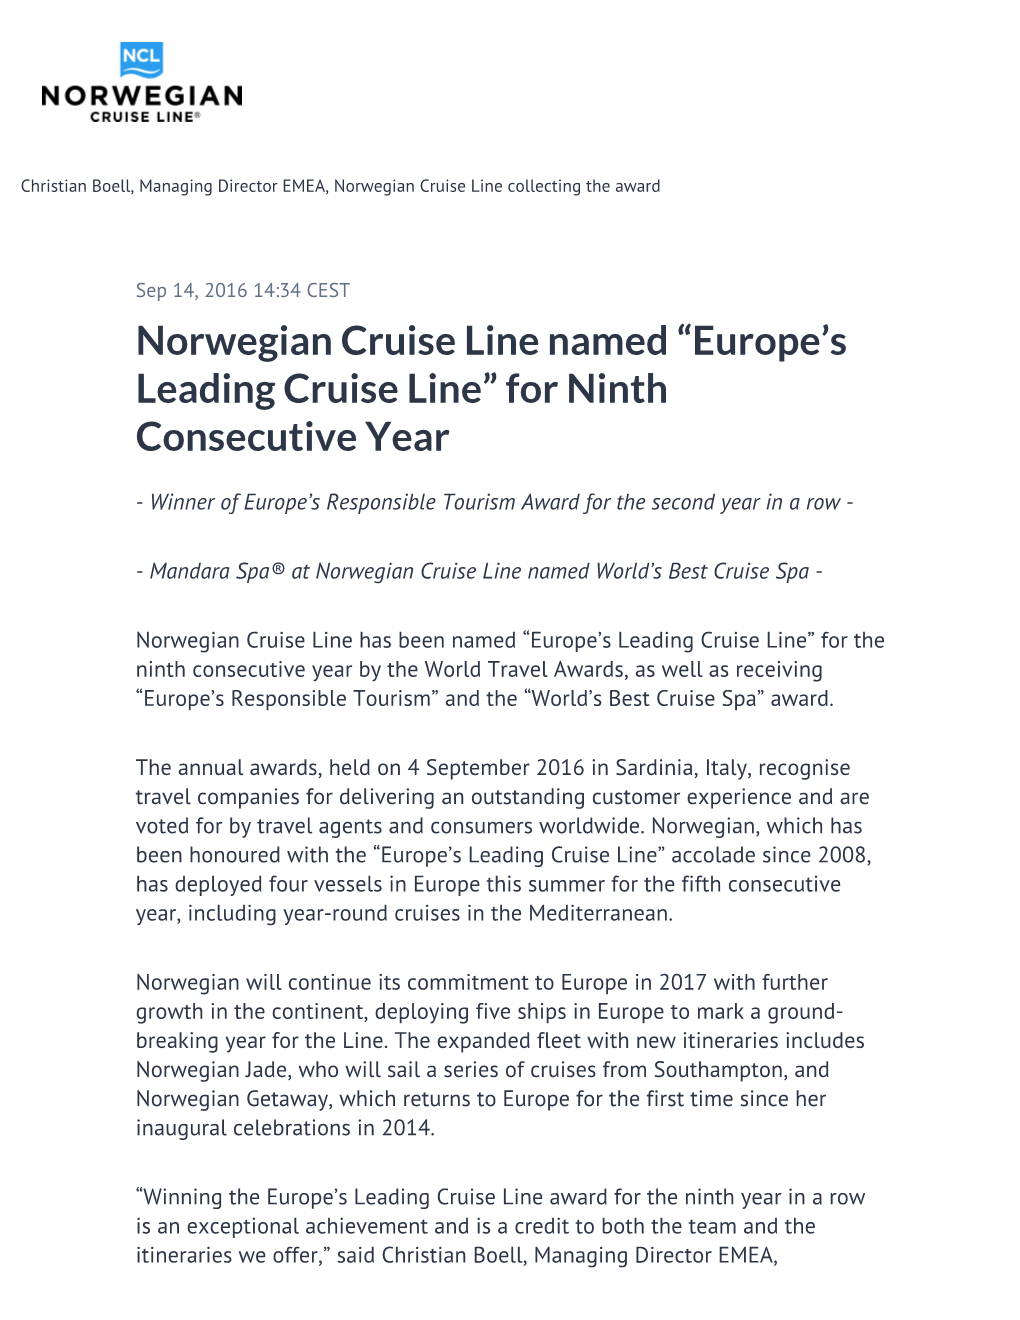 Europe's Leading Cruise Line